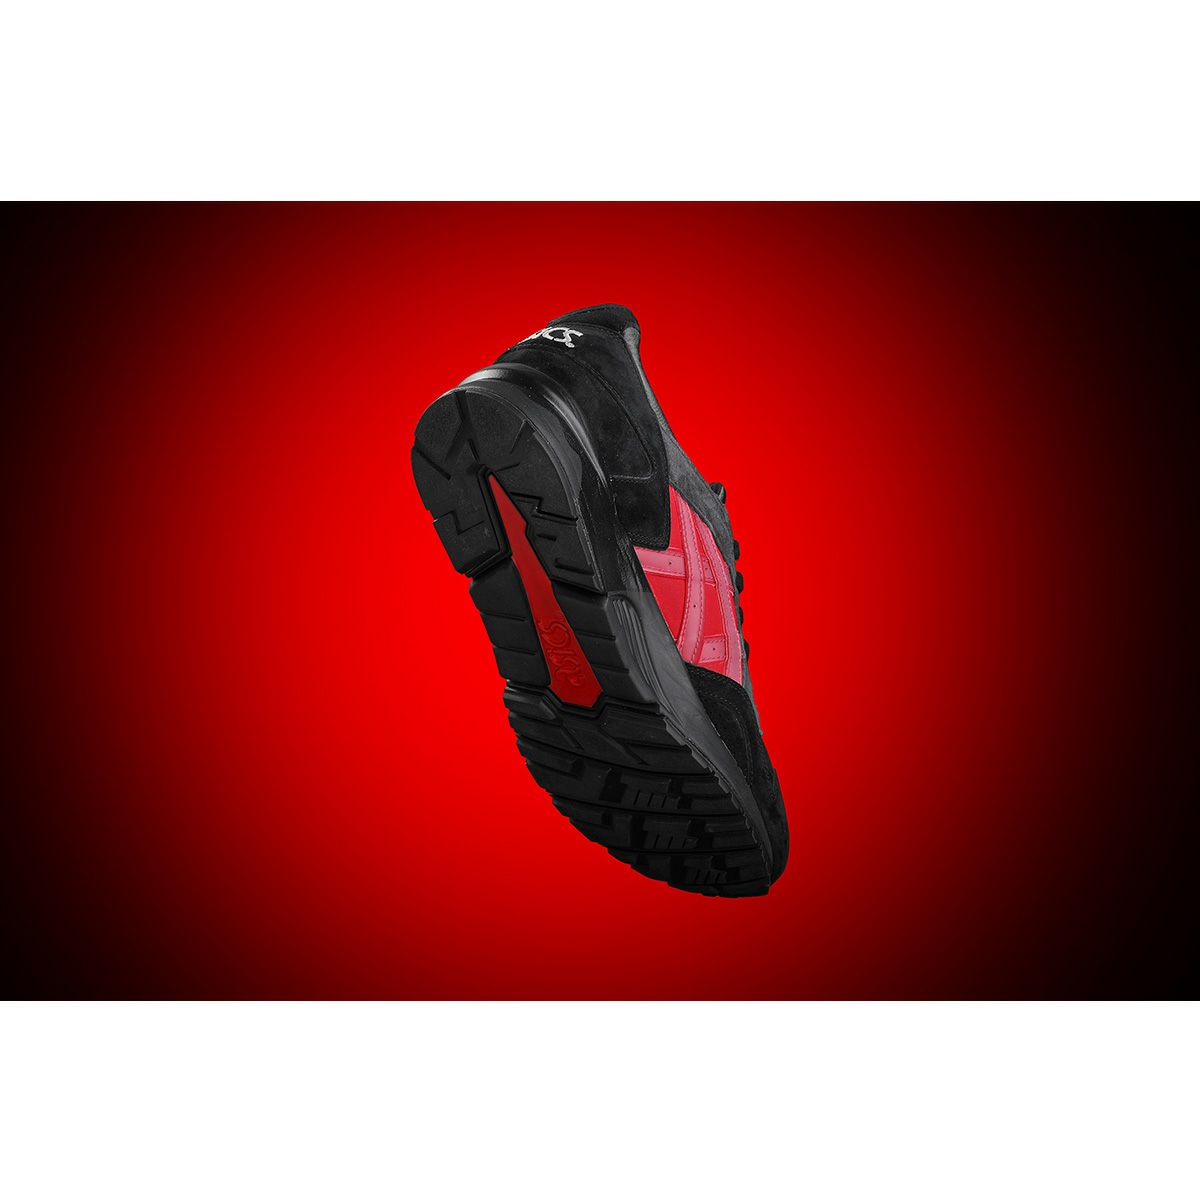 ASICS Tiger GEL-LYTE V “KLSHOGUN” for KICKS LAB. BLACK/CLASSIC RED 